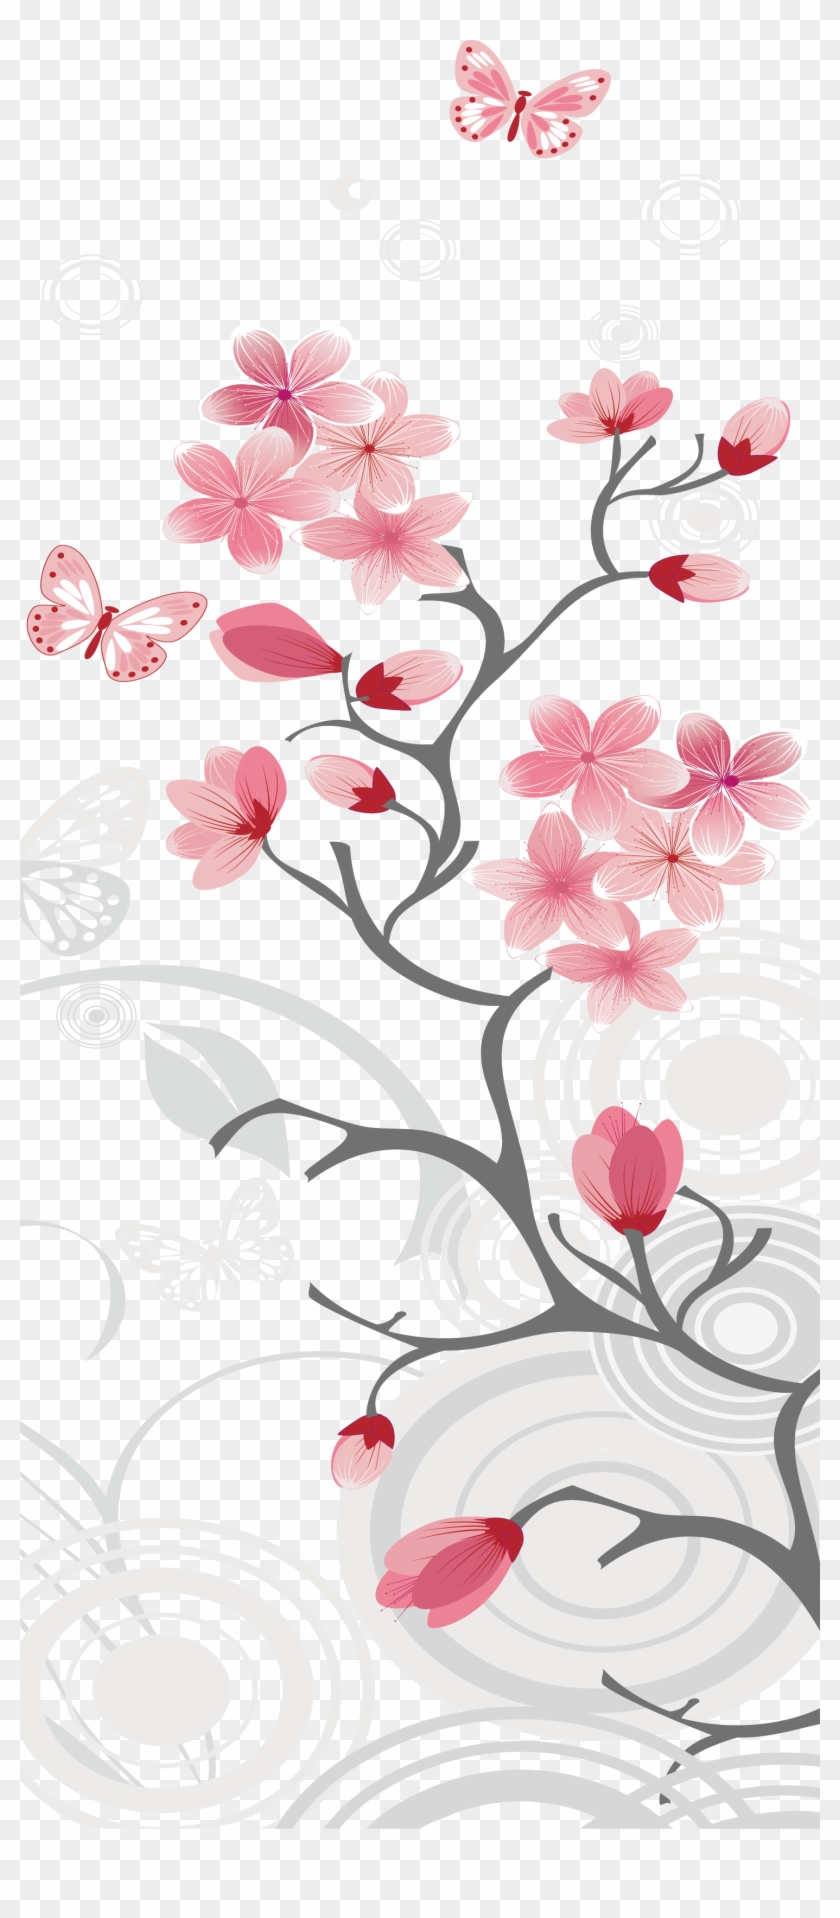 Cherry Blossom Clip Art - Cherry Blossom Background #286978